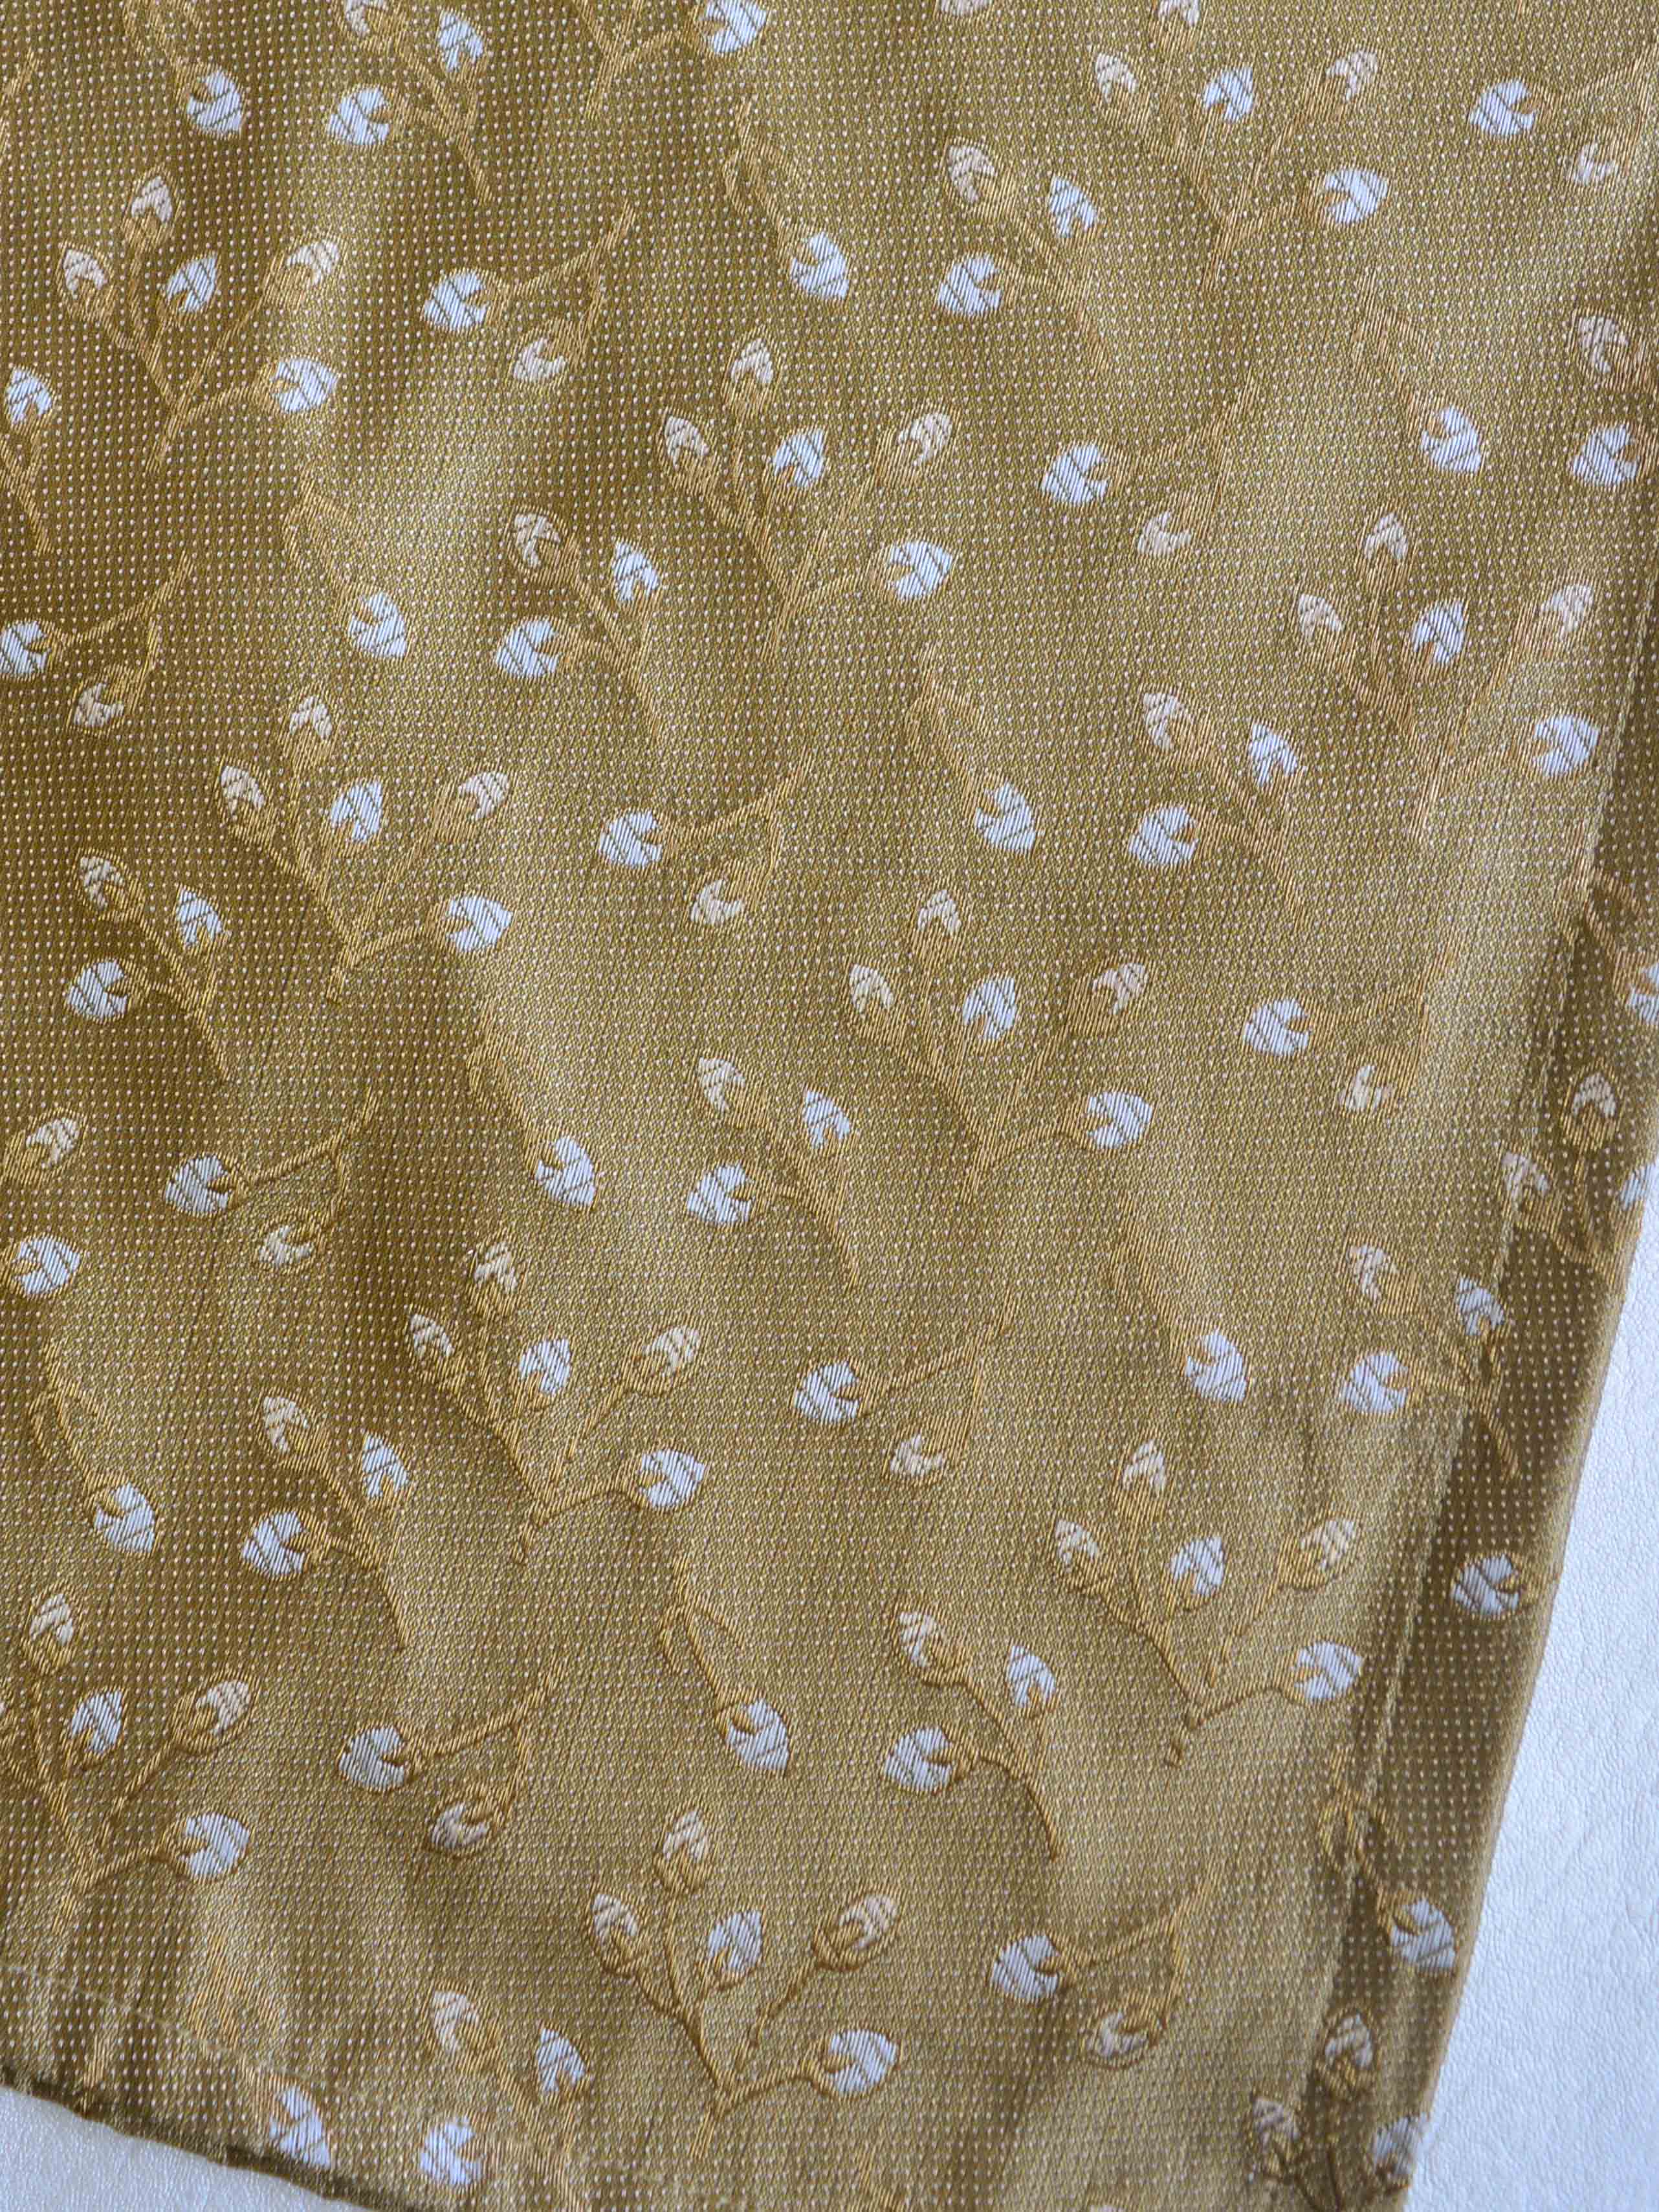 Banarasee Brocade Salwar Kameez Fabric With Art Silk  Mirror-Work Dupatta-Gold & Teal